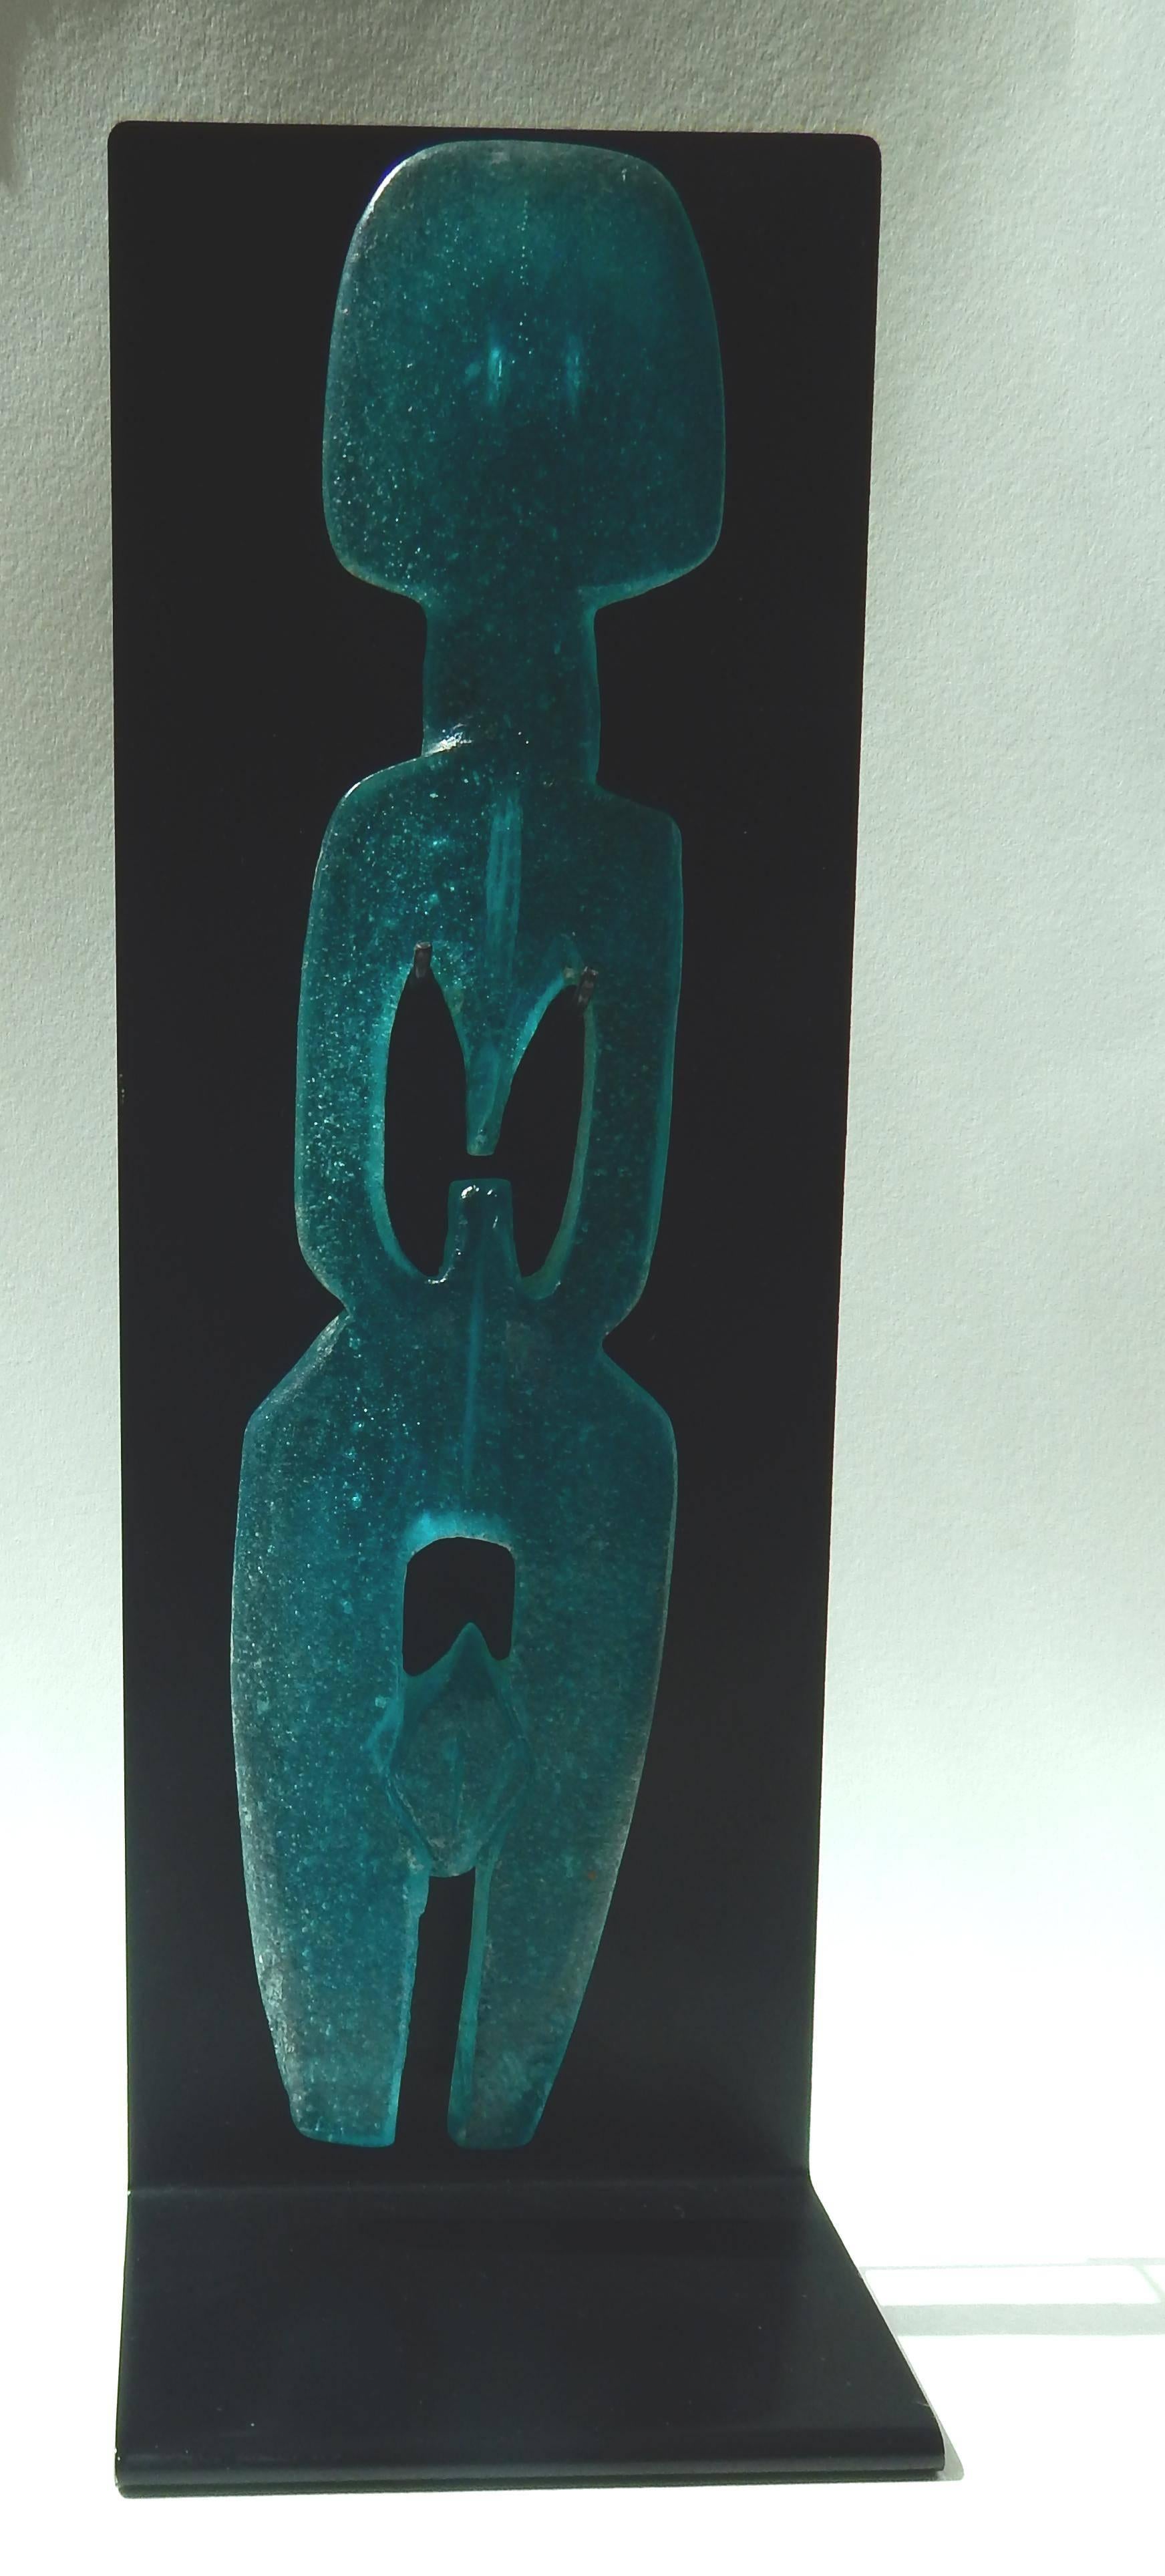 Daum glass figural sculpture in Aqua by Thomas Gleb (b. 1912 Poland)
A Thomas Gleb blue pâte de verre figure for Daum,
late 20th century, with original black painted metal stand.
The figure bears the molded signatures: GLEB and Daum.
Also